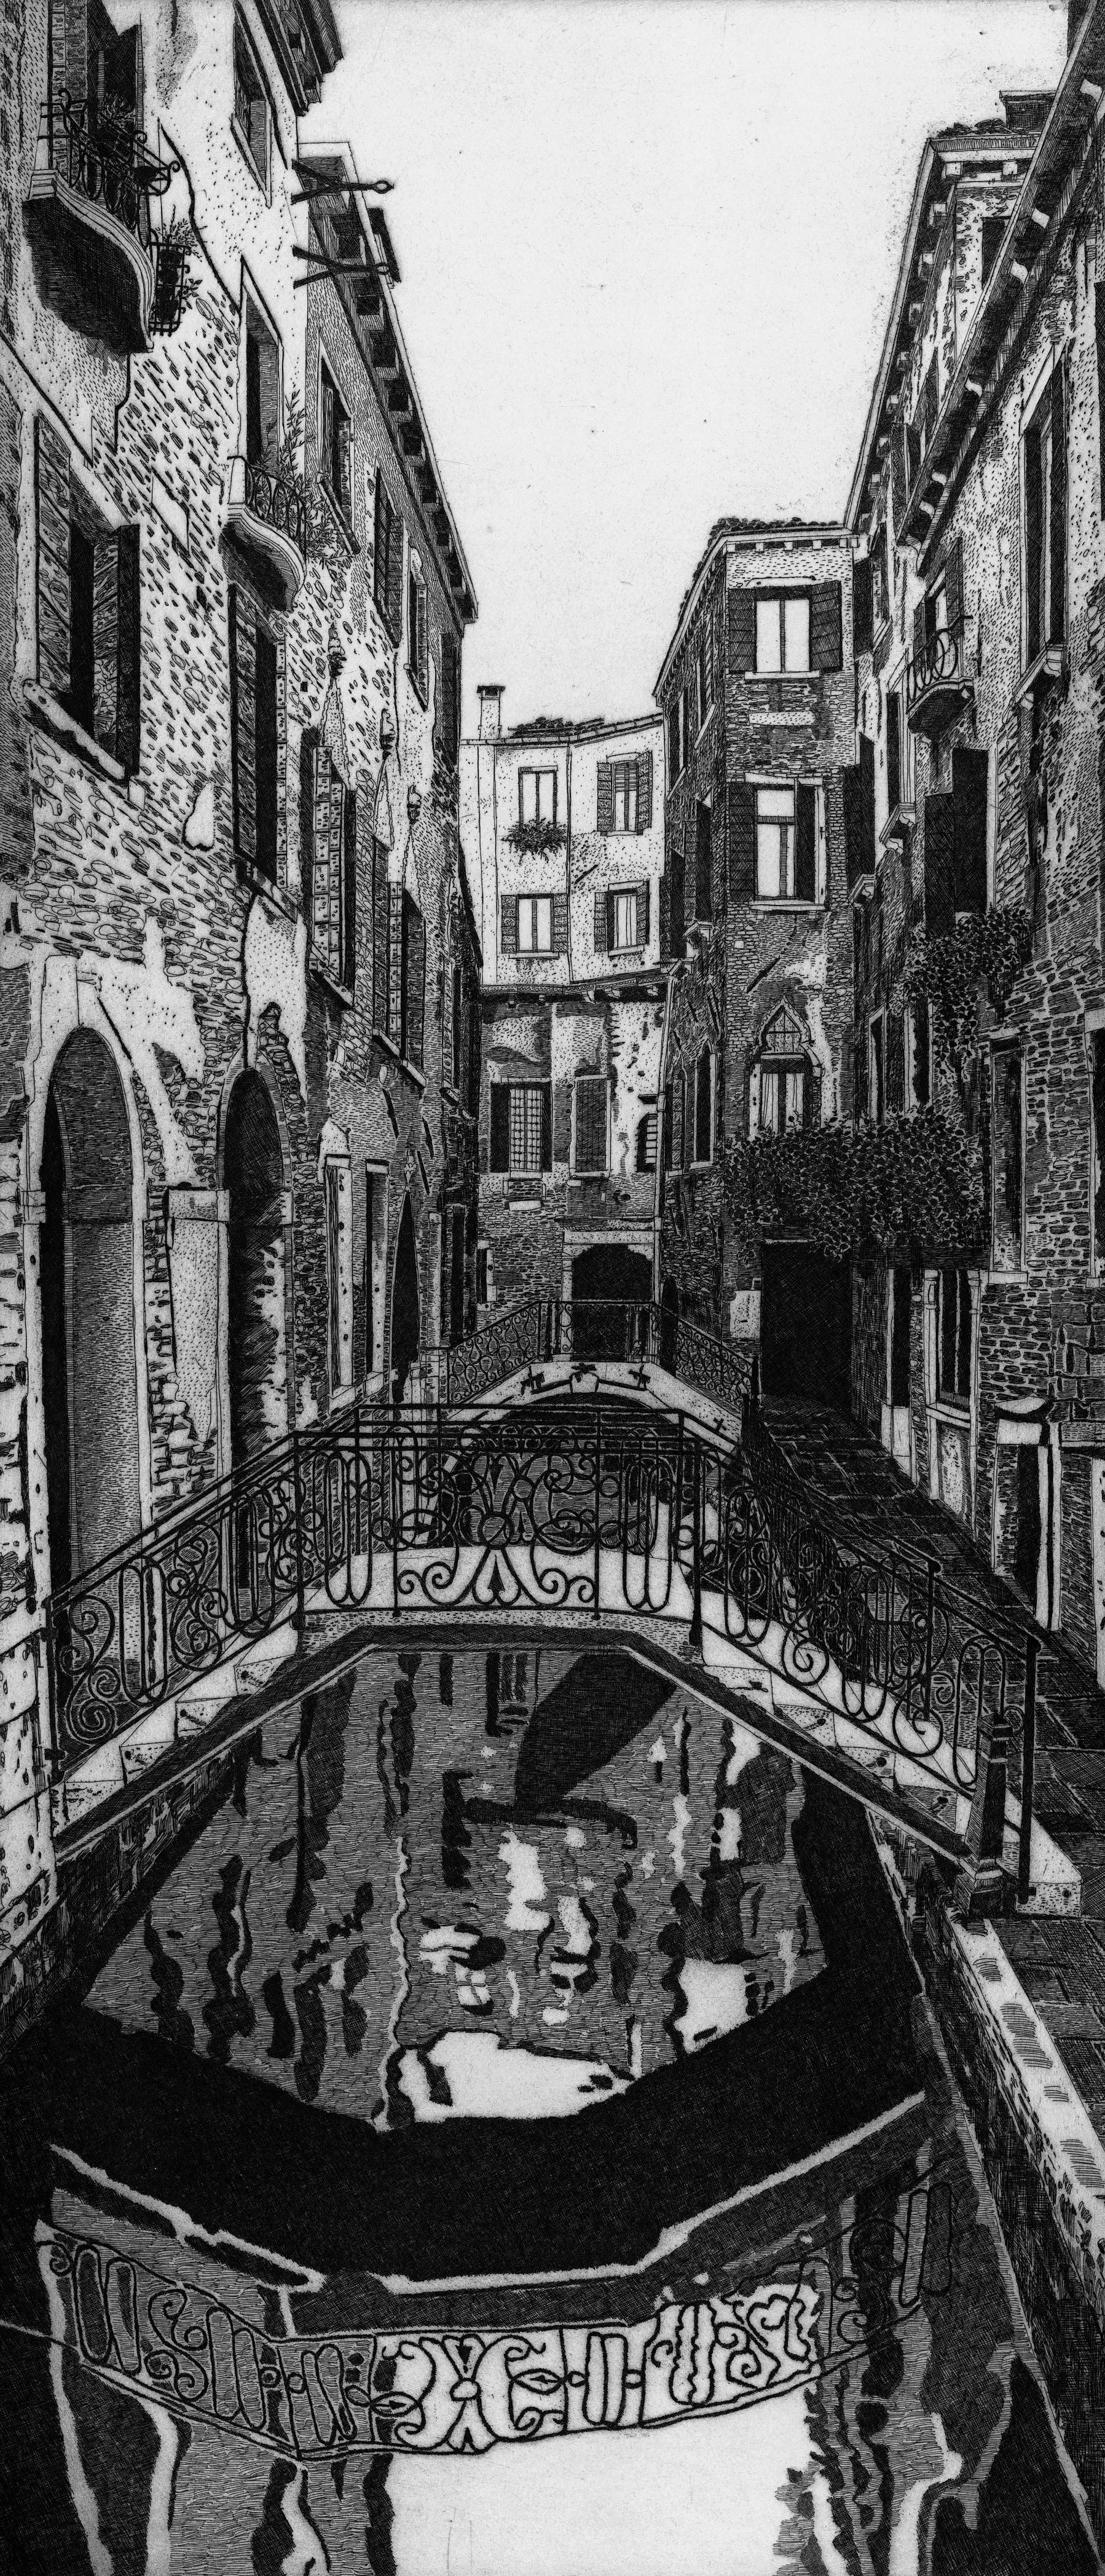 Venice views, rare complete collection, 39 prints different sizes 4